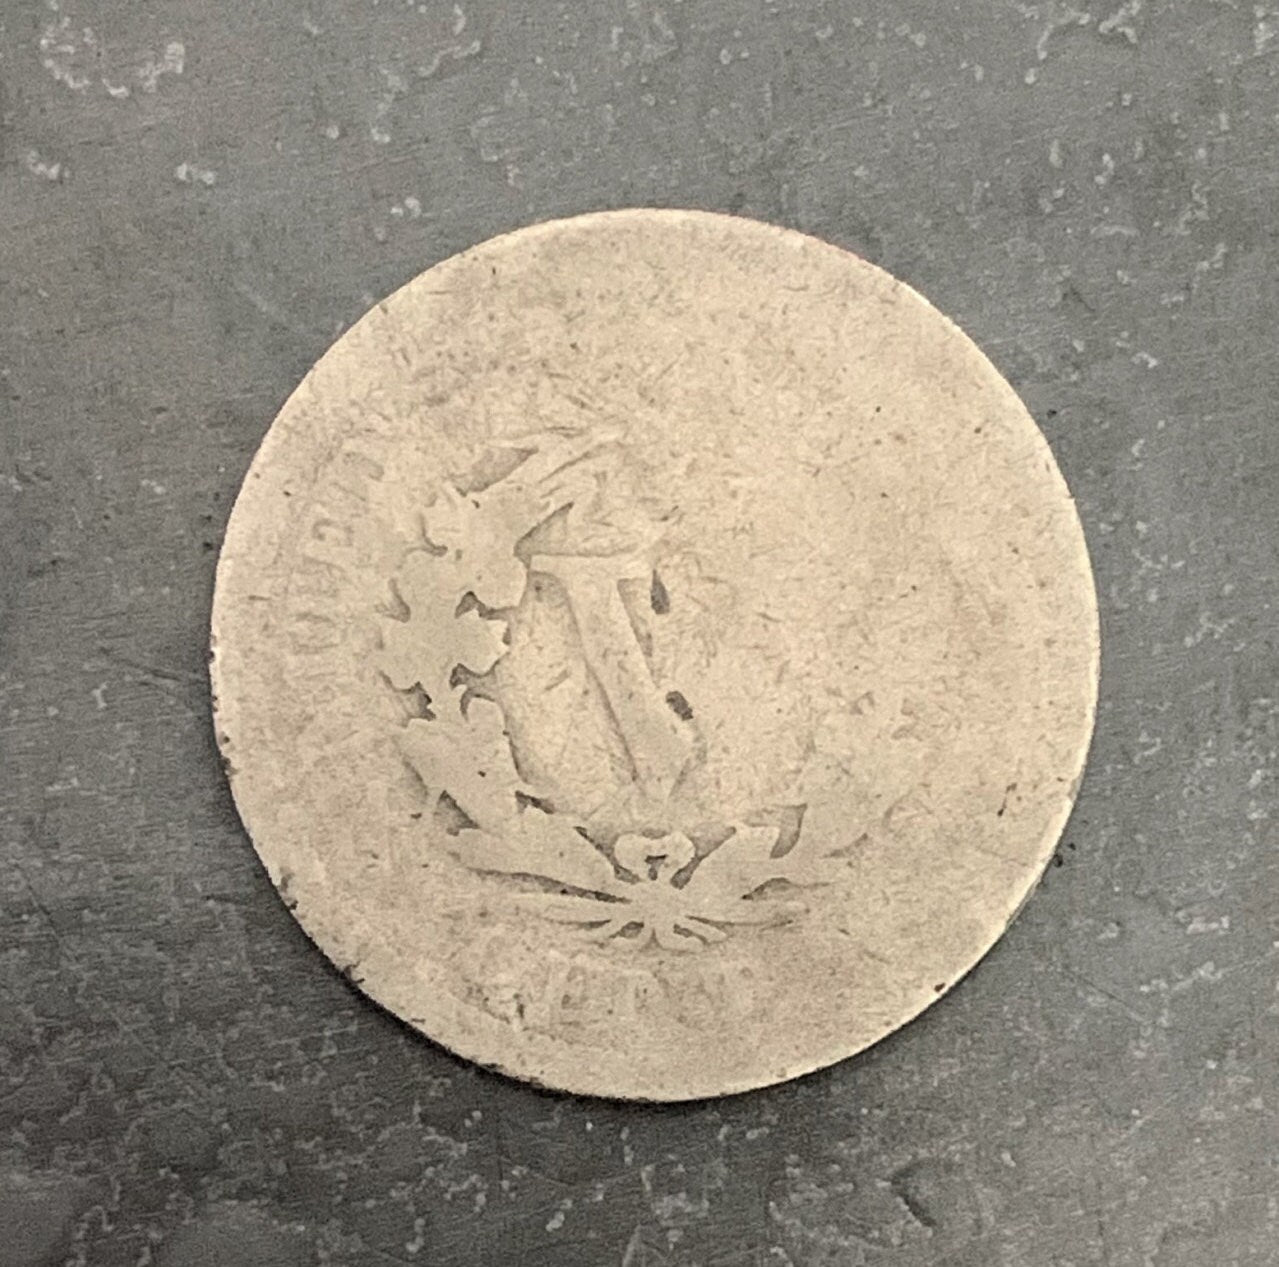 1890 Liberty Head Nickel - 1890 V Nickel - Philadelphia Mint